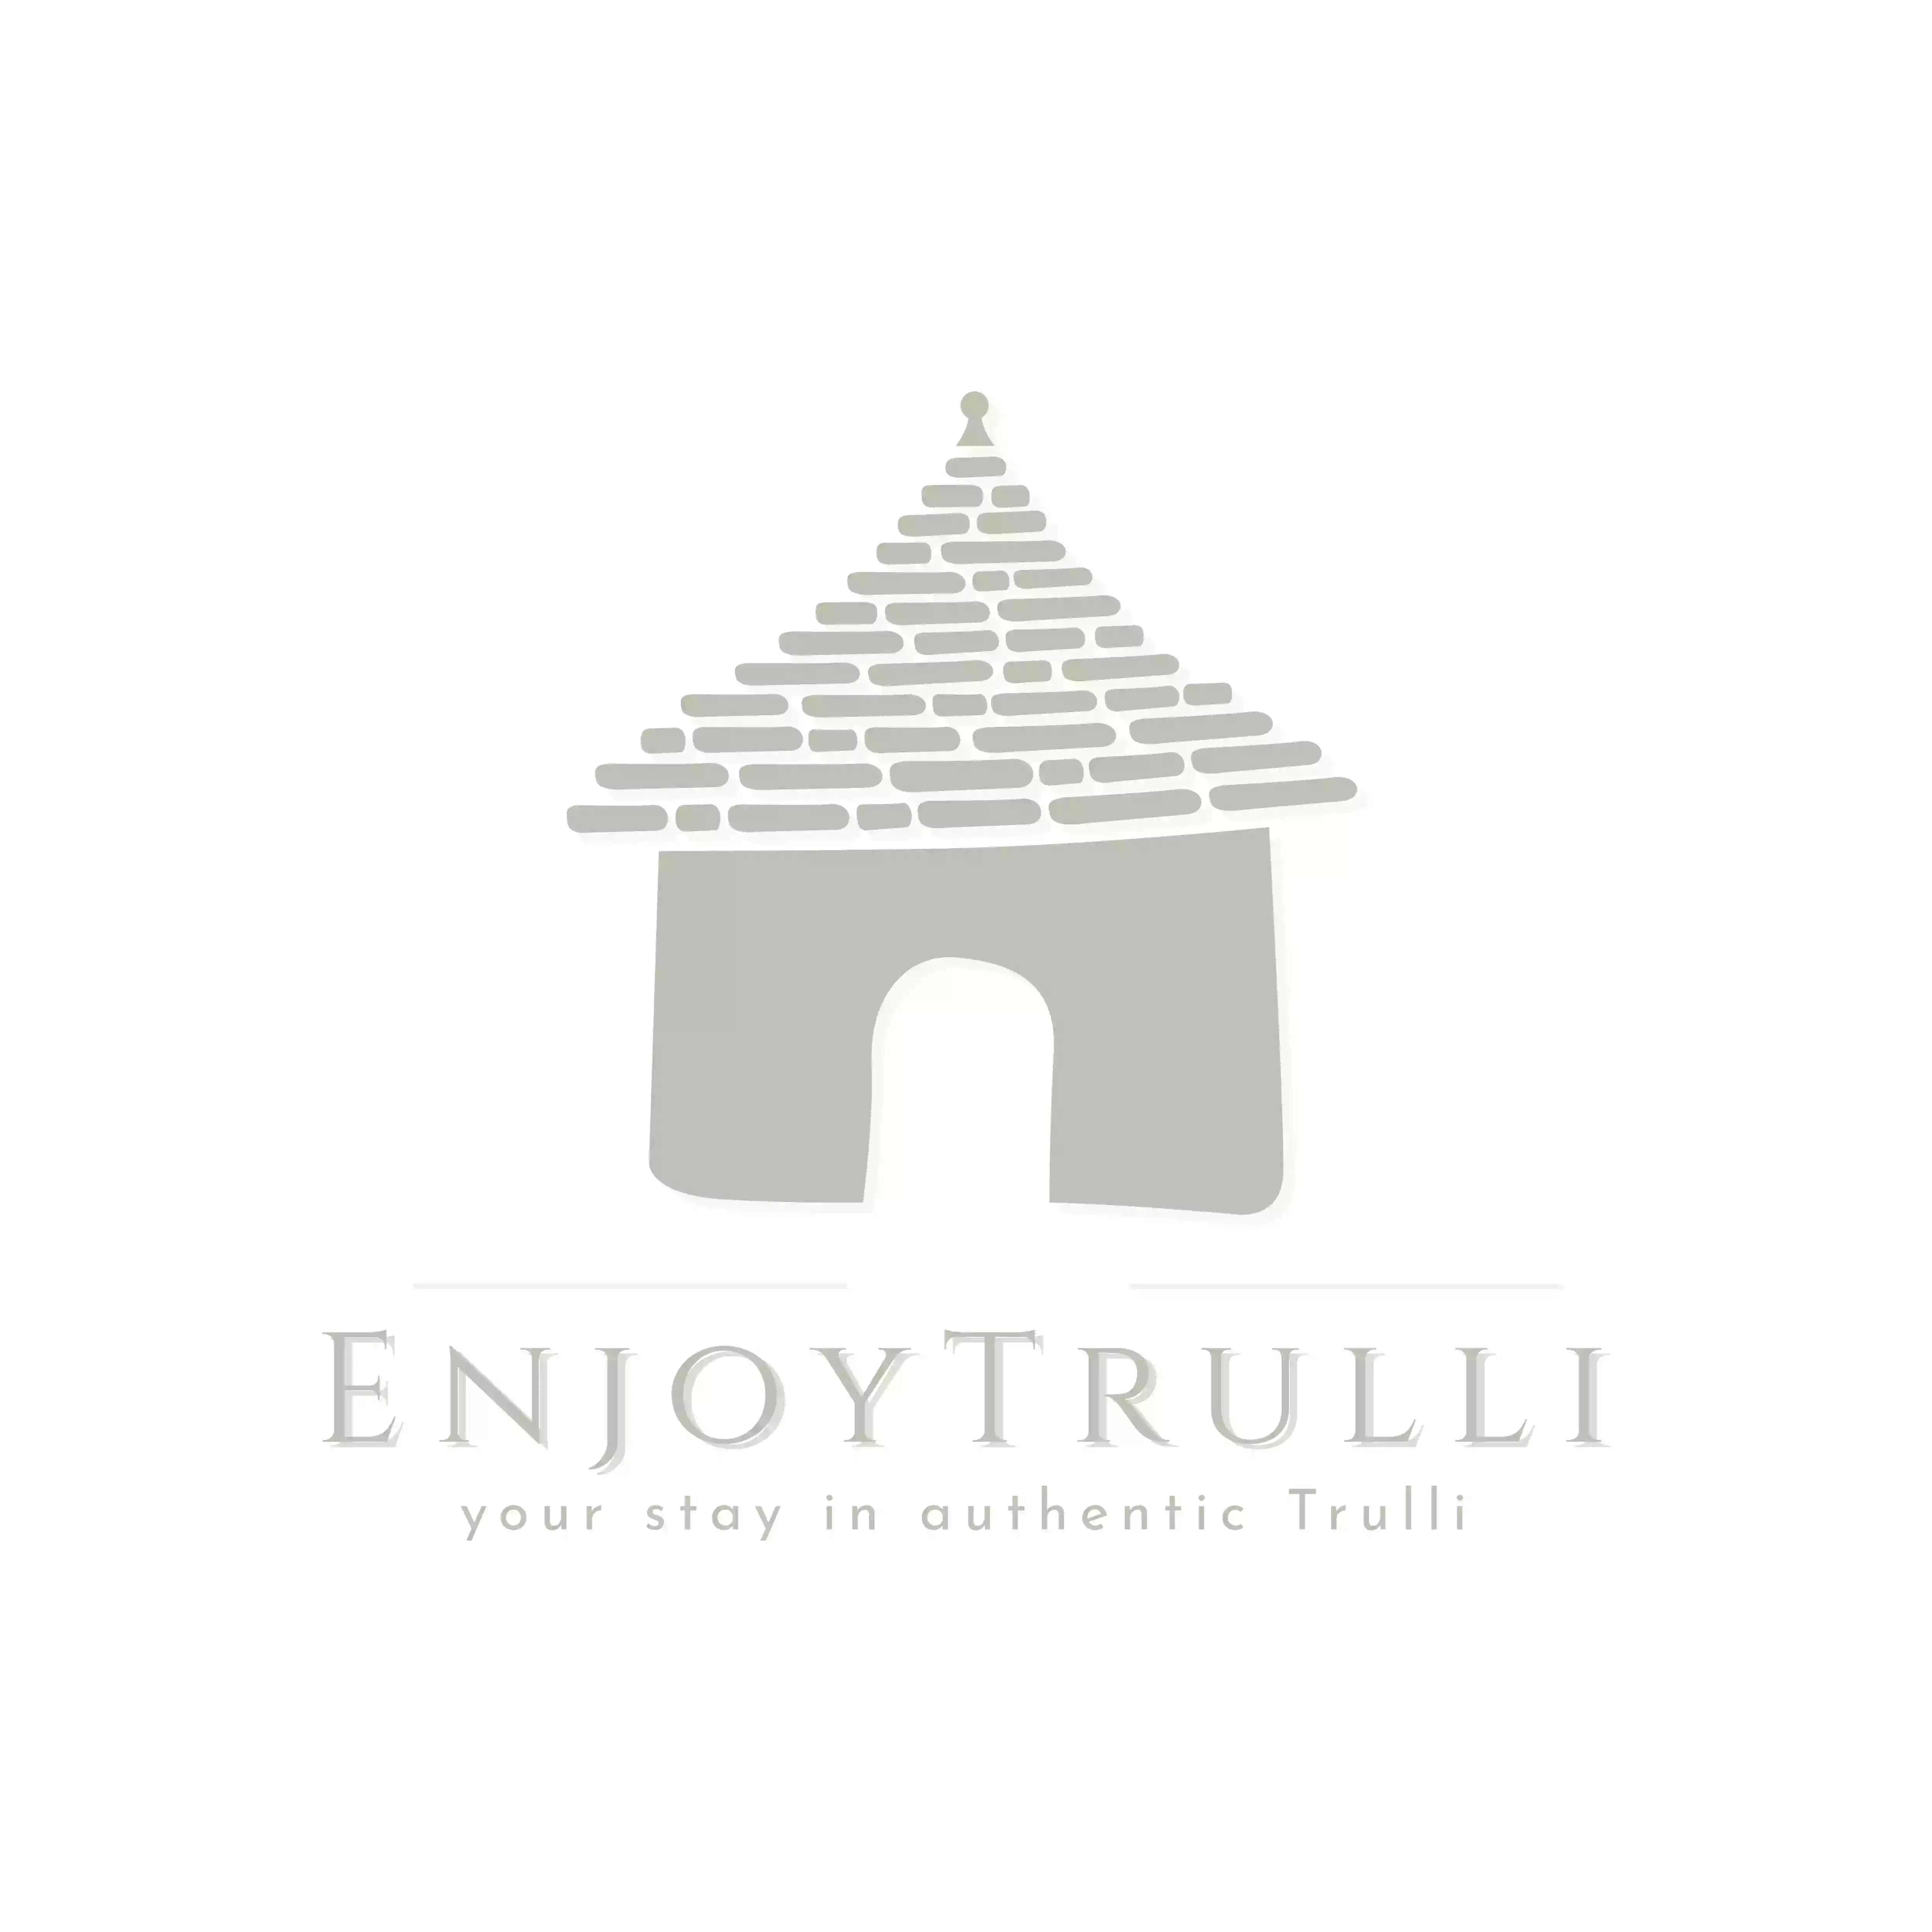 EnjoyTrulli - Unesco Site